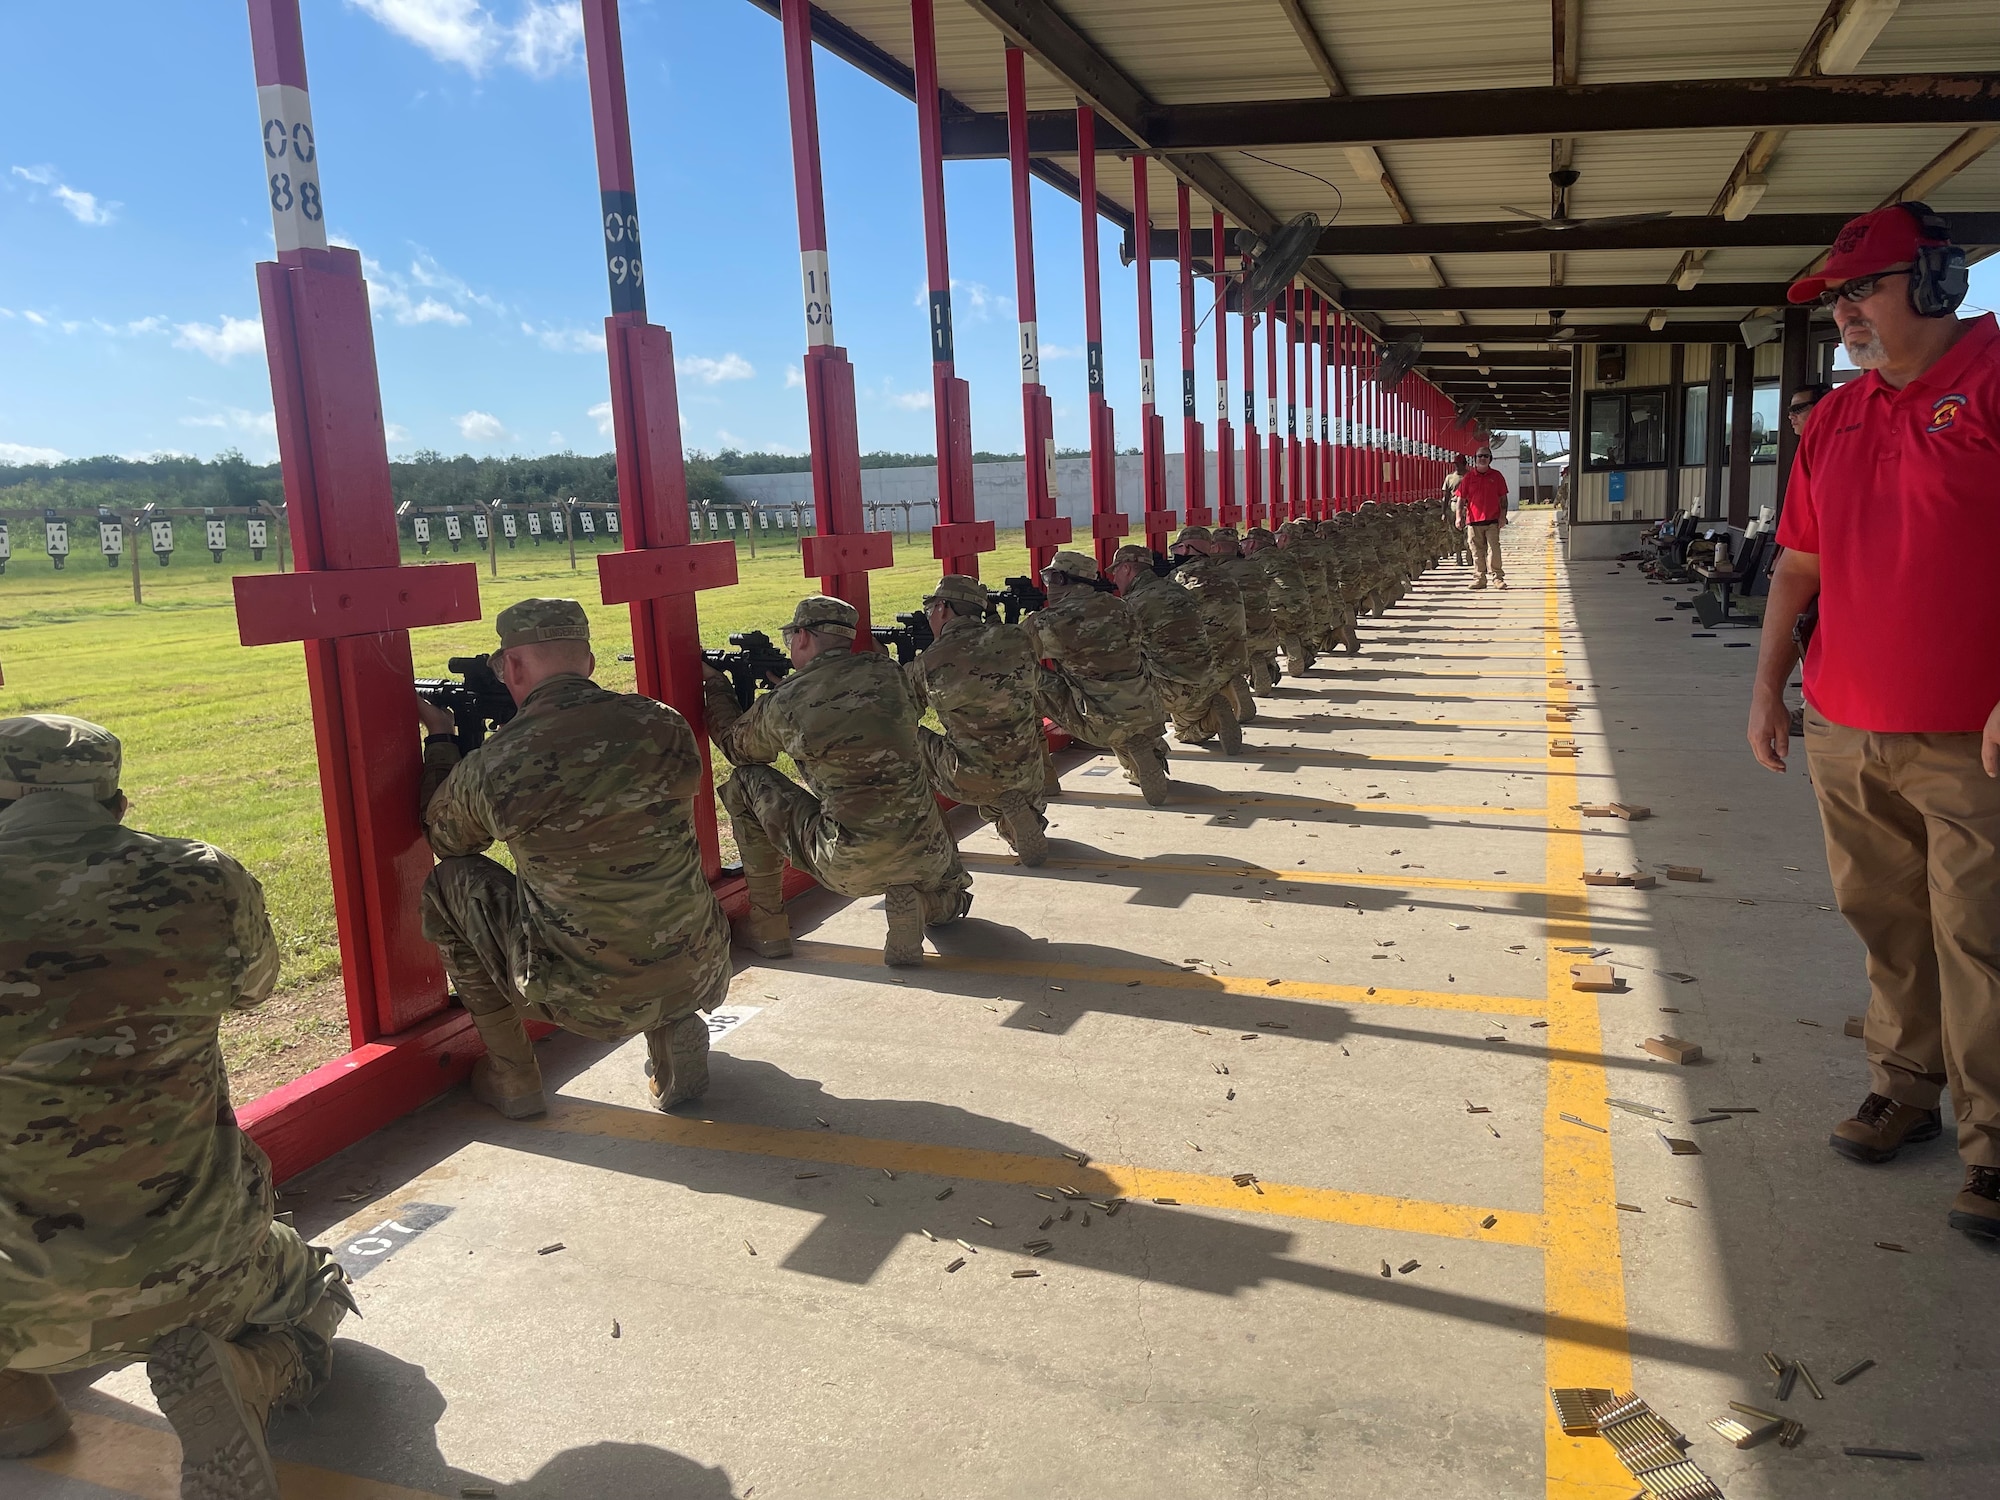 Trainees at firing range.